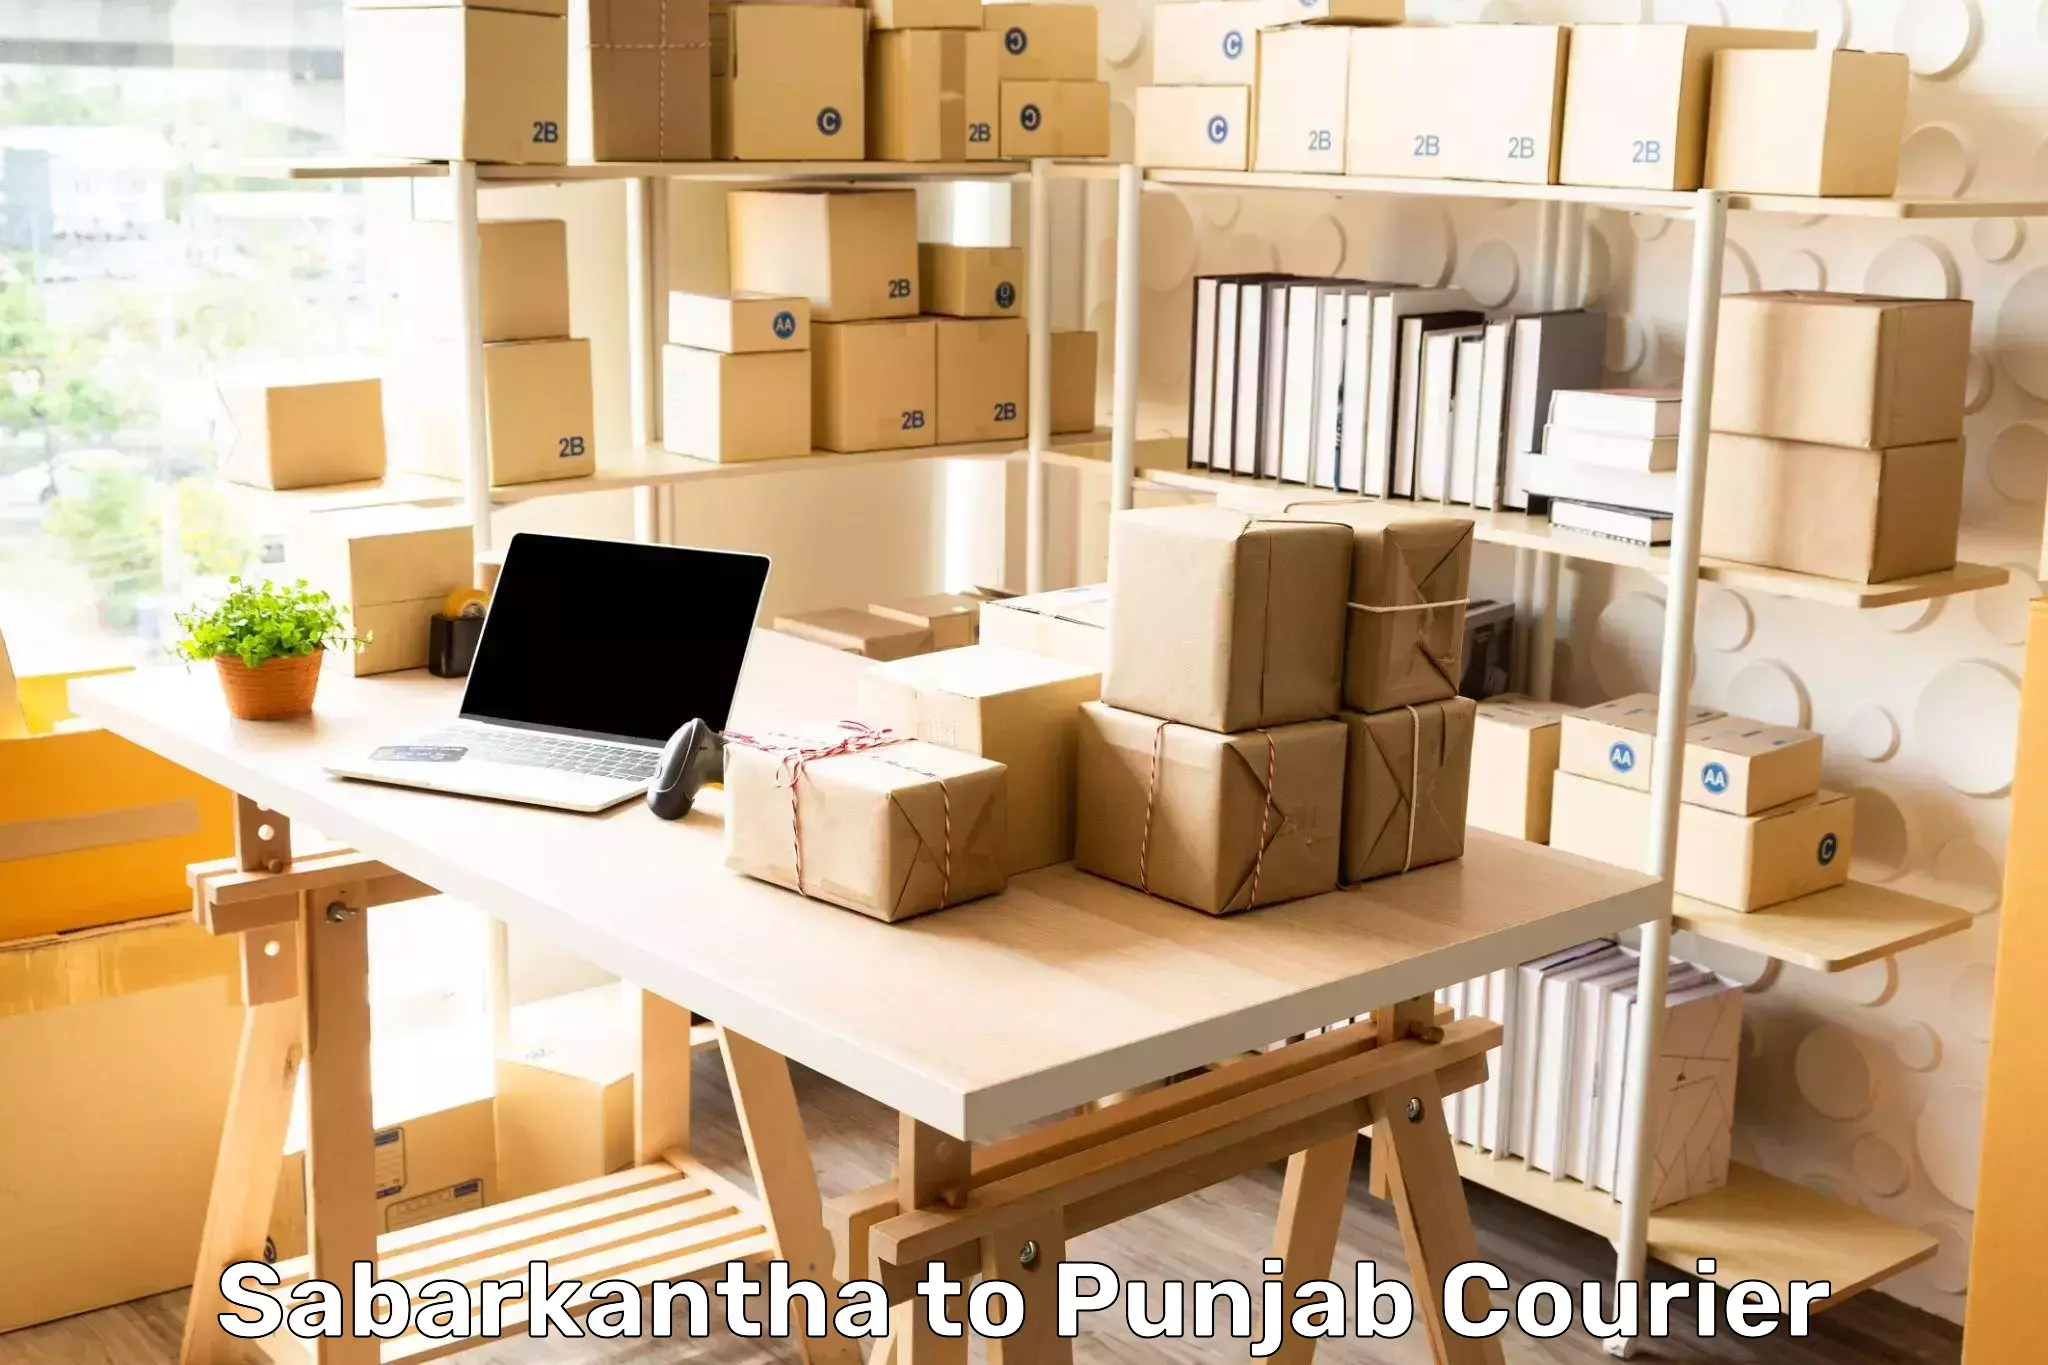 Package tracking Sabarkantha to Jhunir